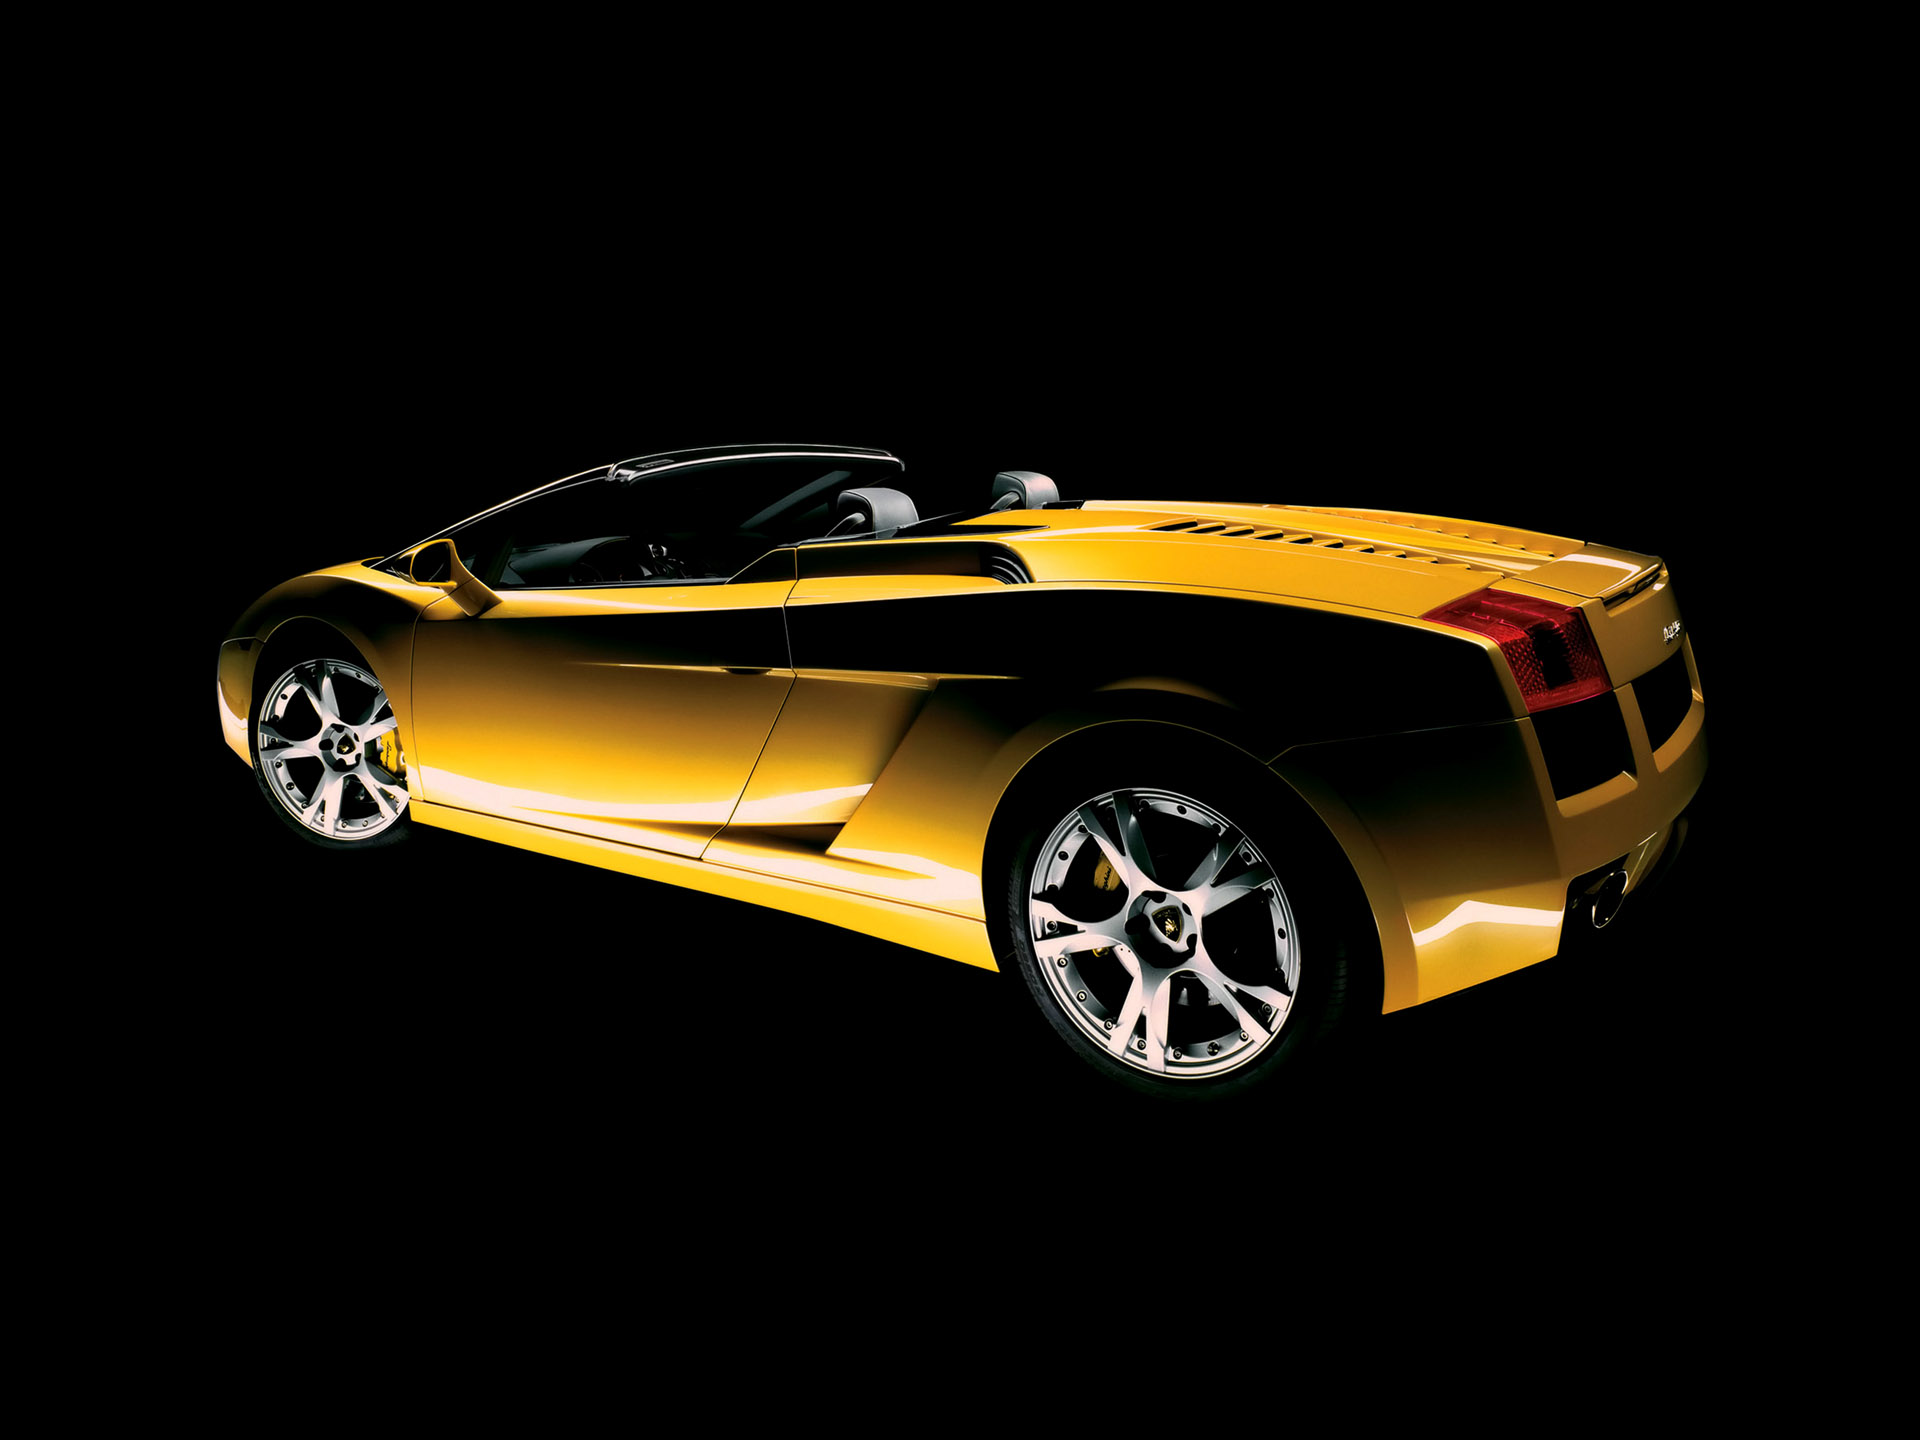  2006 Lamborghini Gallardo Spyder Wallpaper.